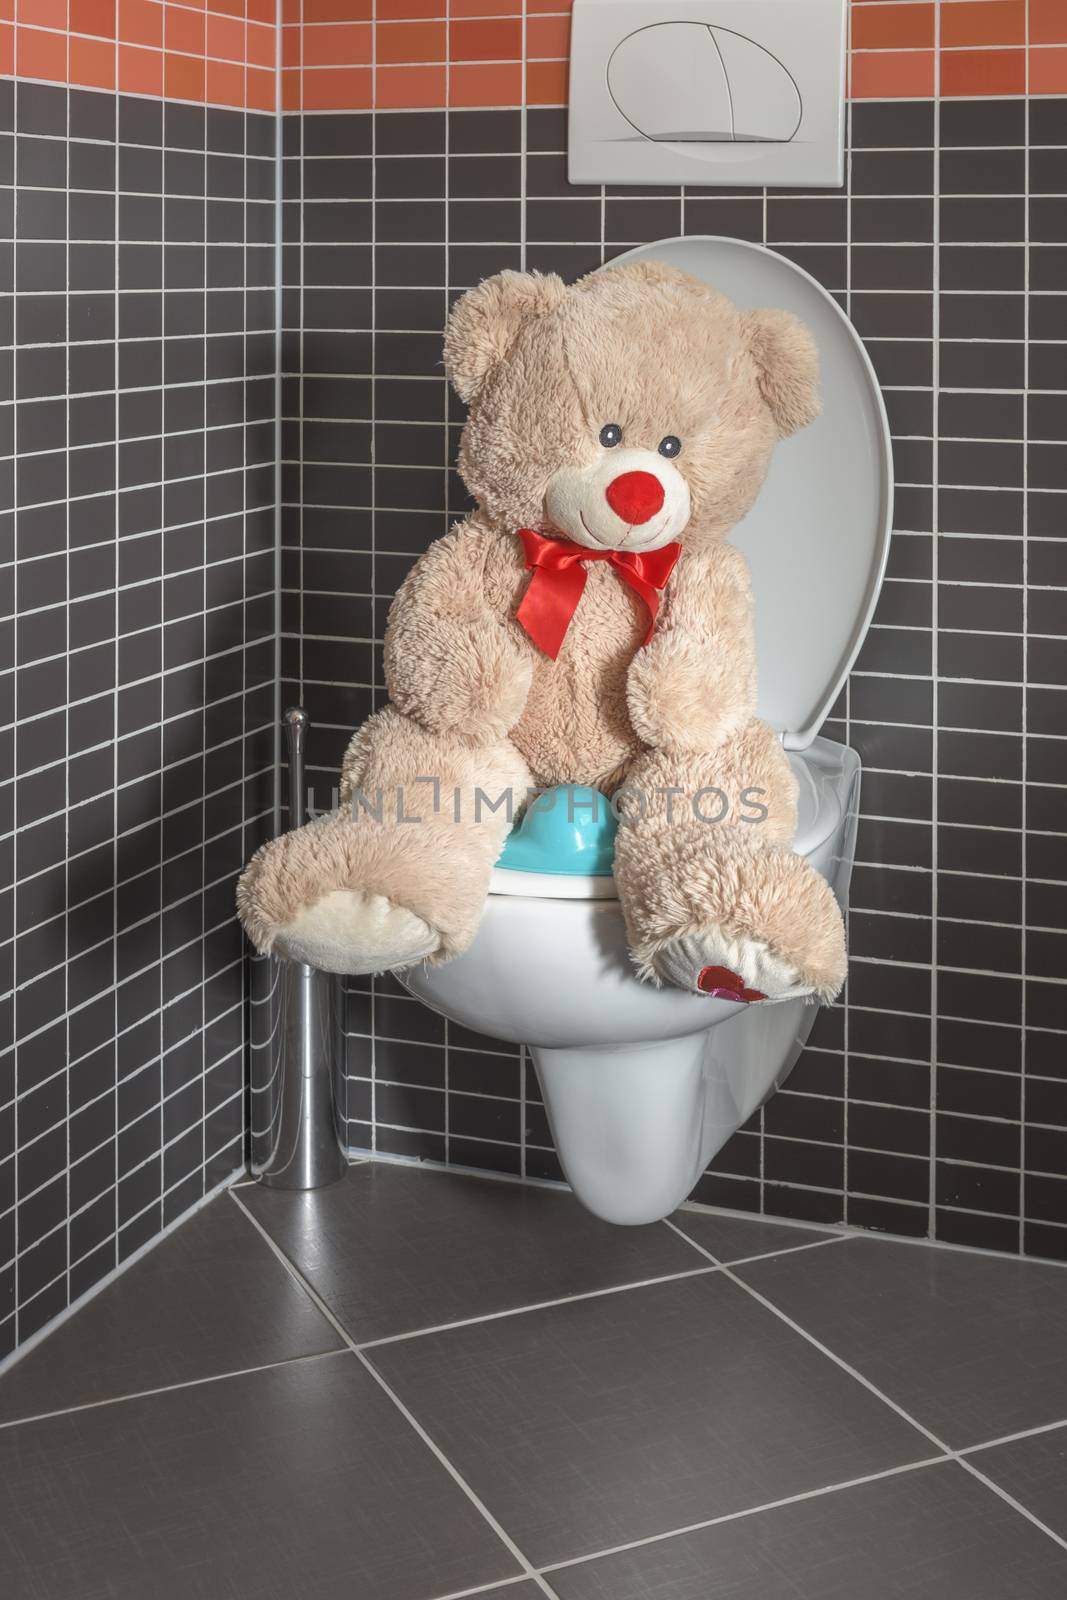 Toy teddy bear sitting on WC toilet bowl in bathroom, early childhood, potty toilet training - teaching